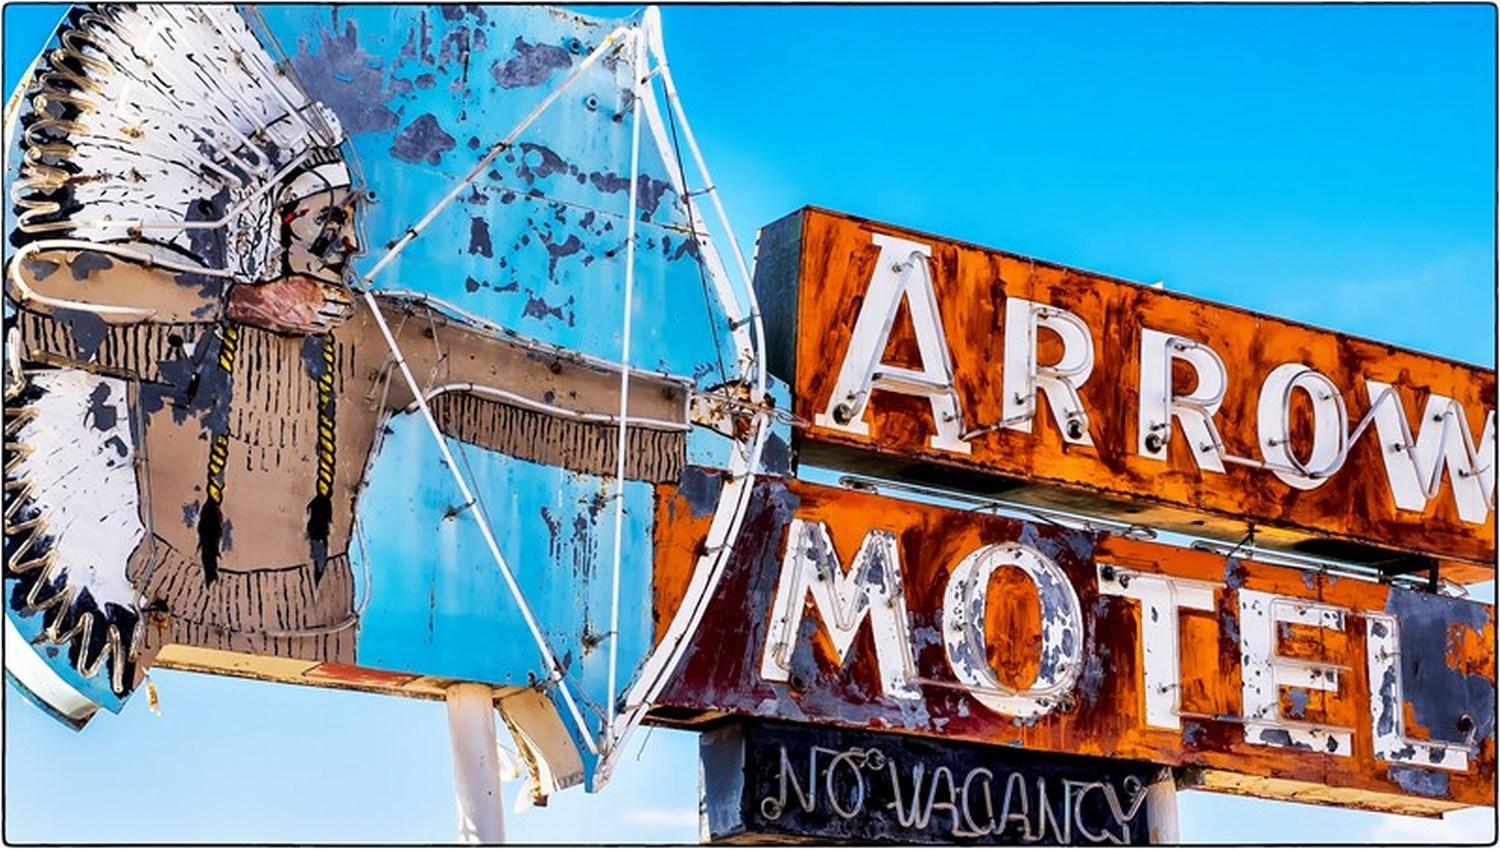 Still-Life Photograph Gary Hodson - Canapé Arrow Motel 